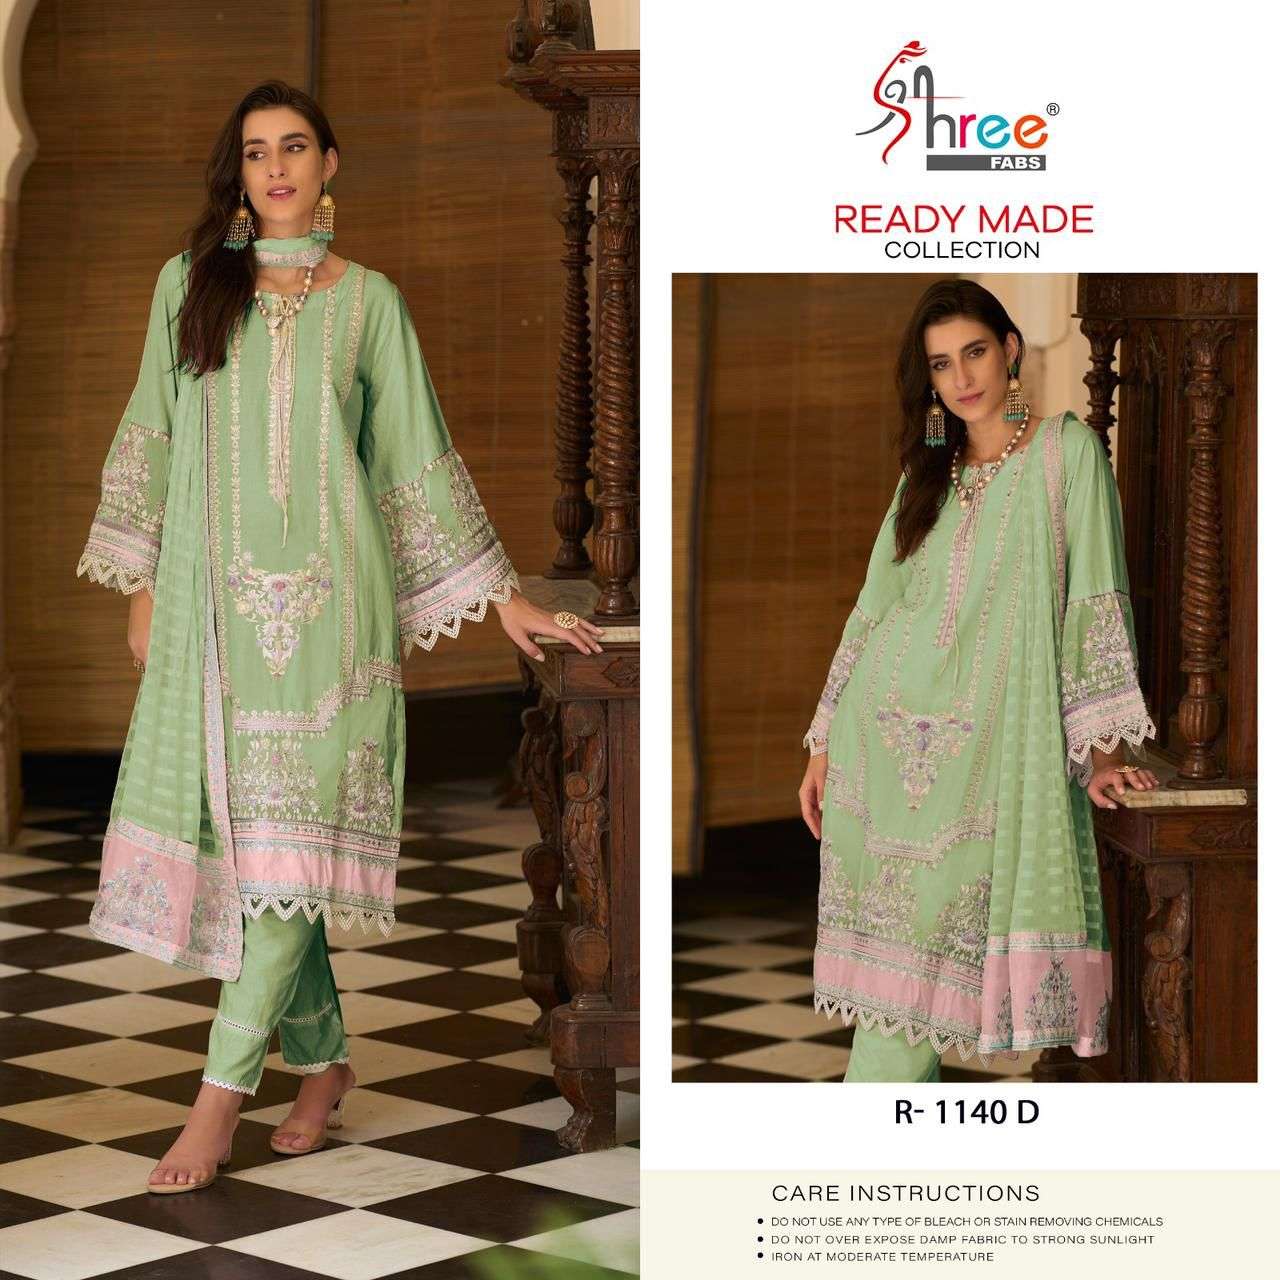 shree fabs sr-1140 premium lawn cotton readymade salwar kameez wholesale price surart